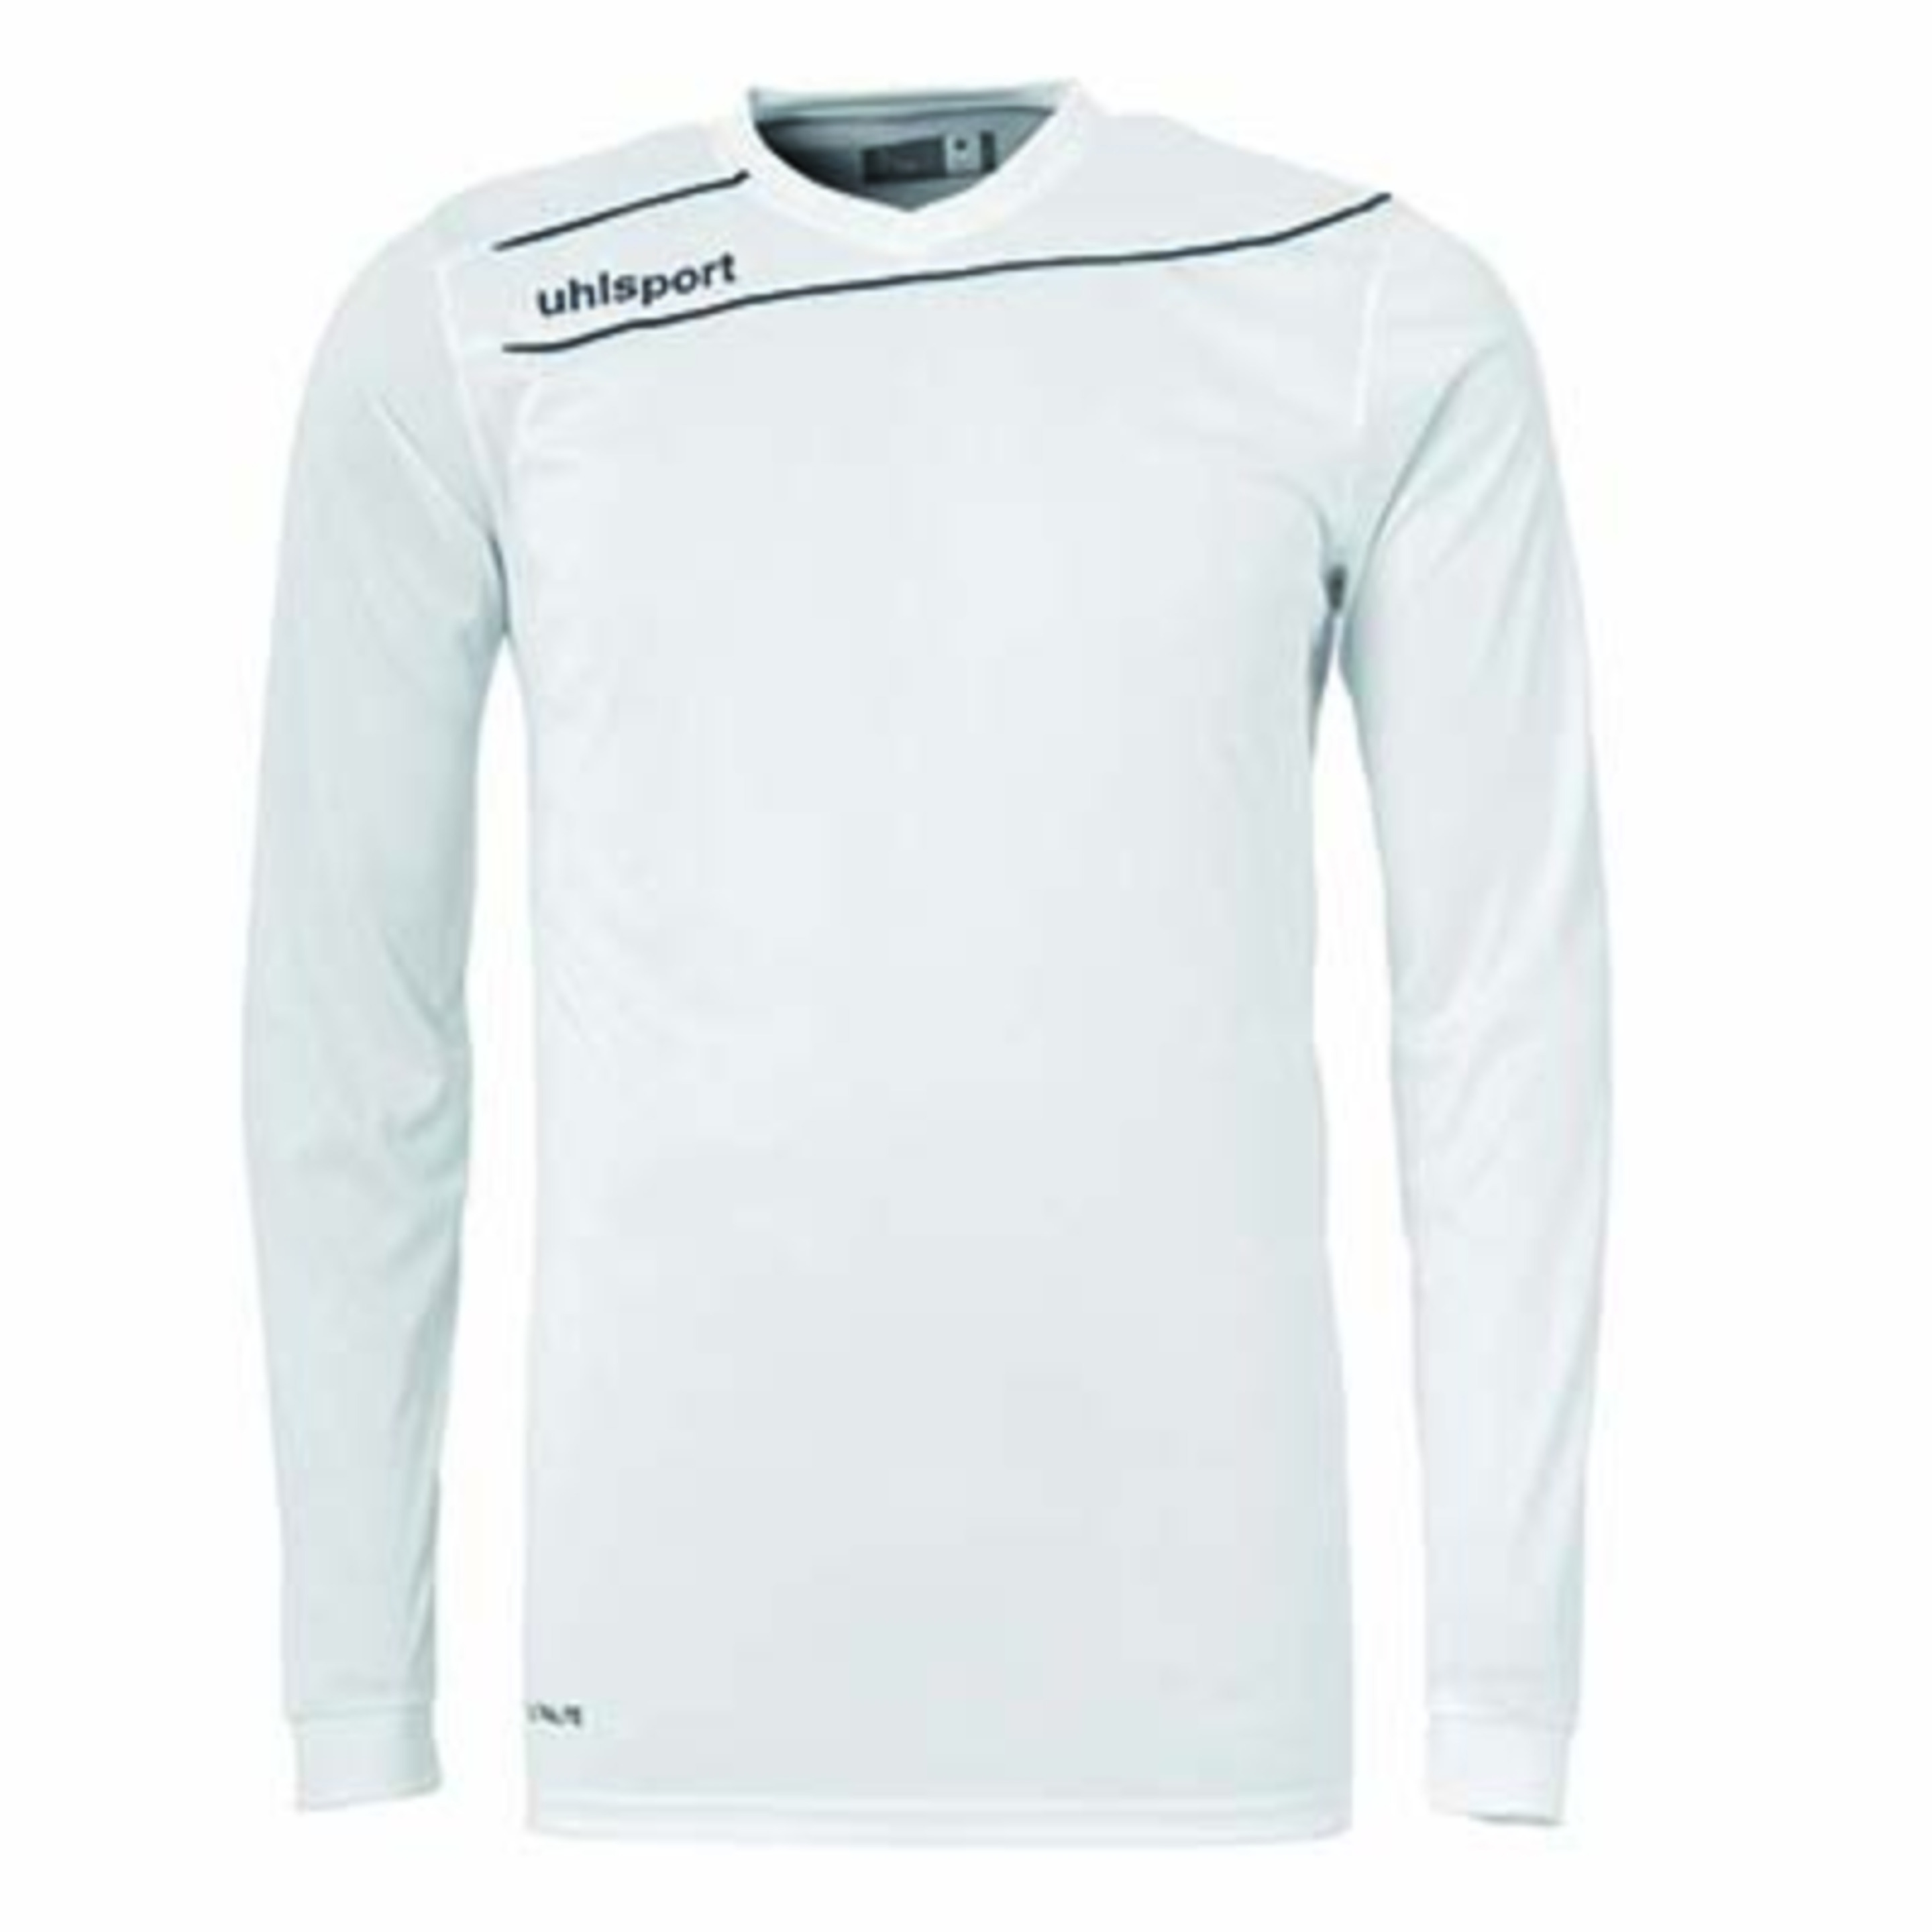 Stream 3.0 Camiseta Ml Blanco/negro Uhlsport